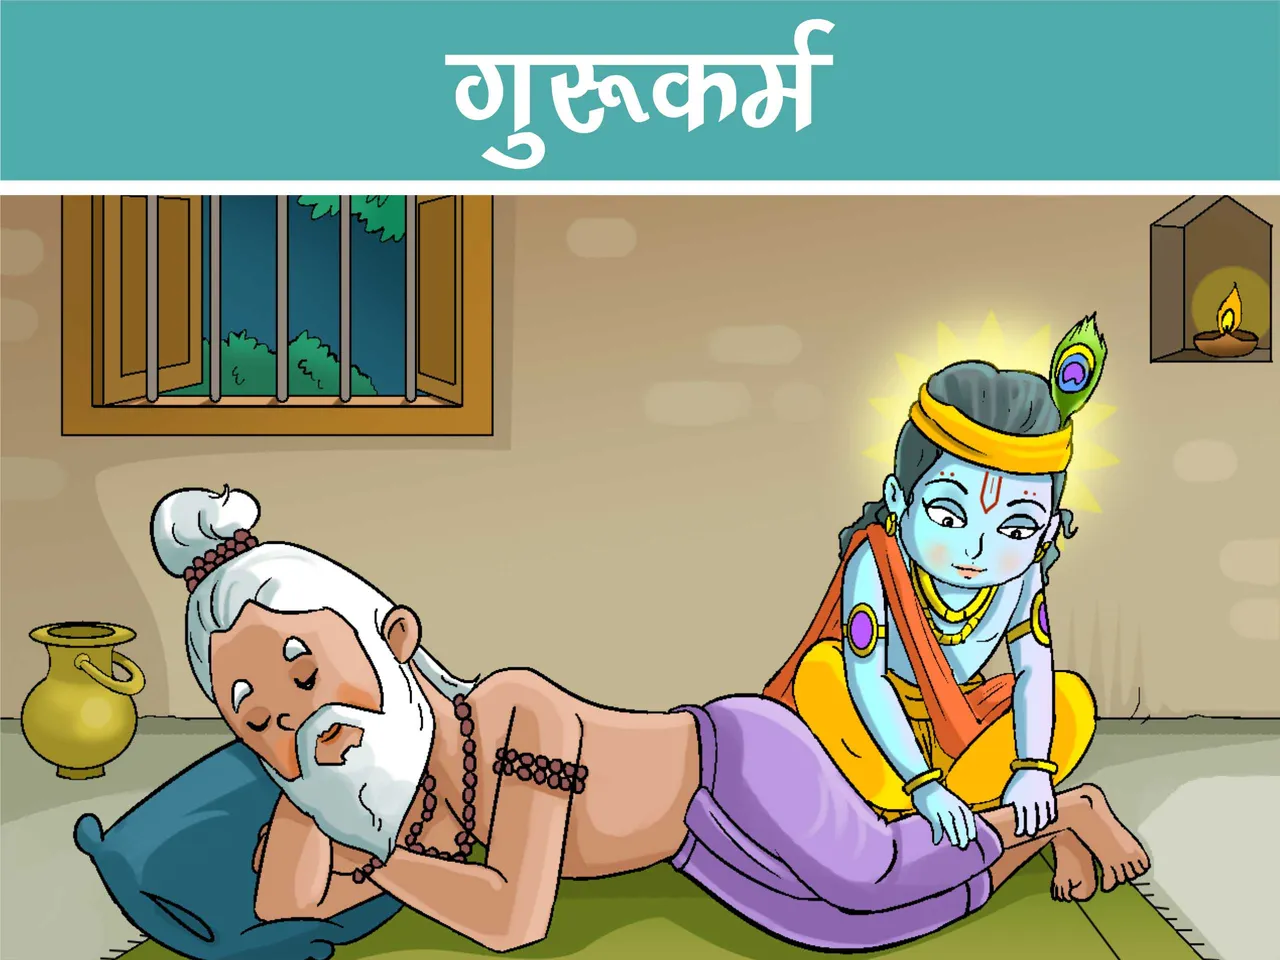 Shri Krishna And his Teacher cartoon image